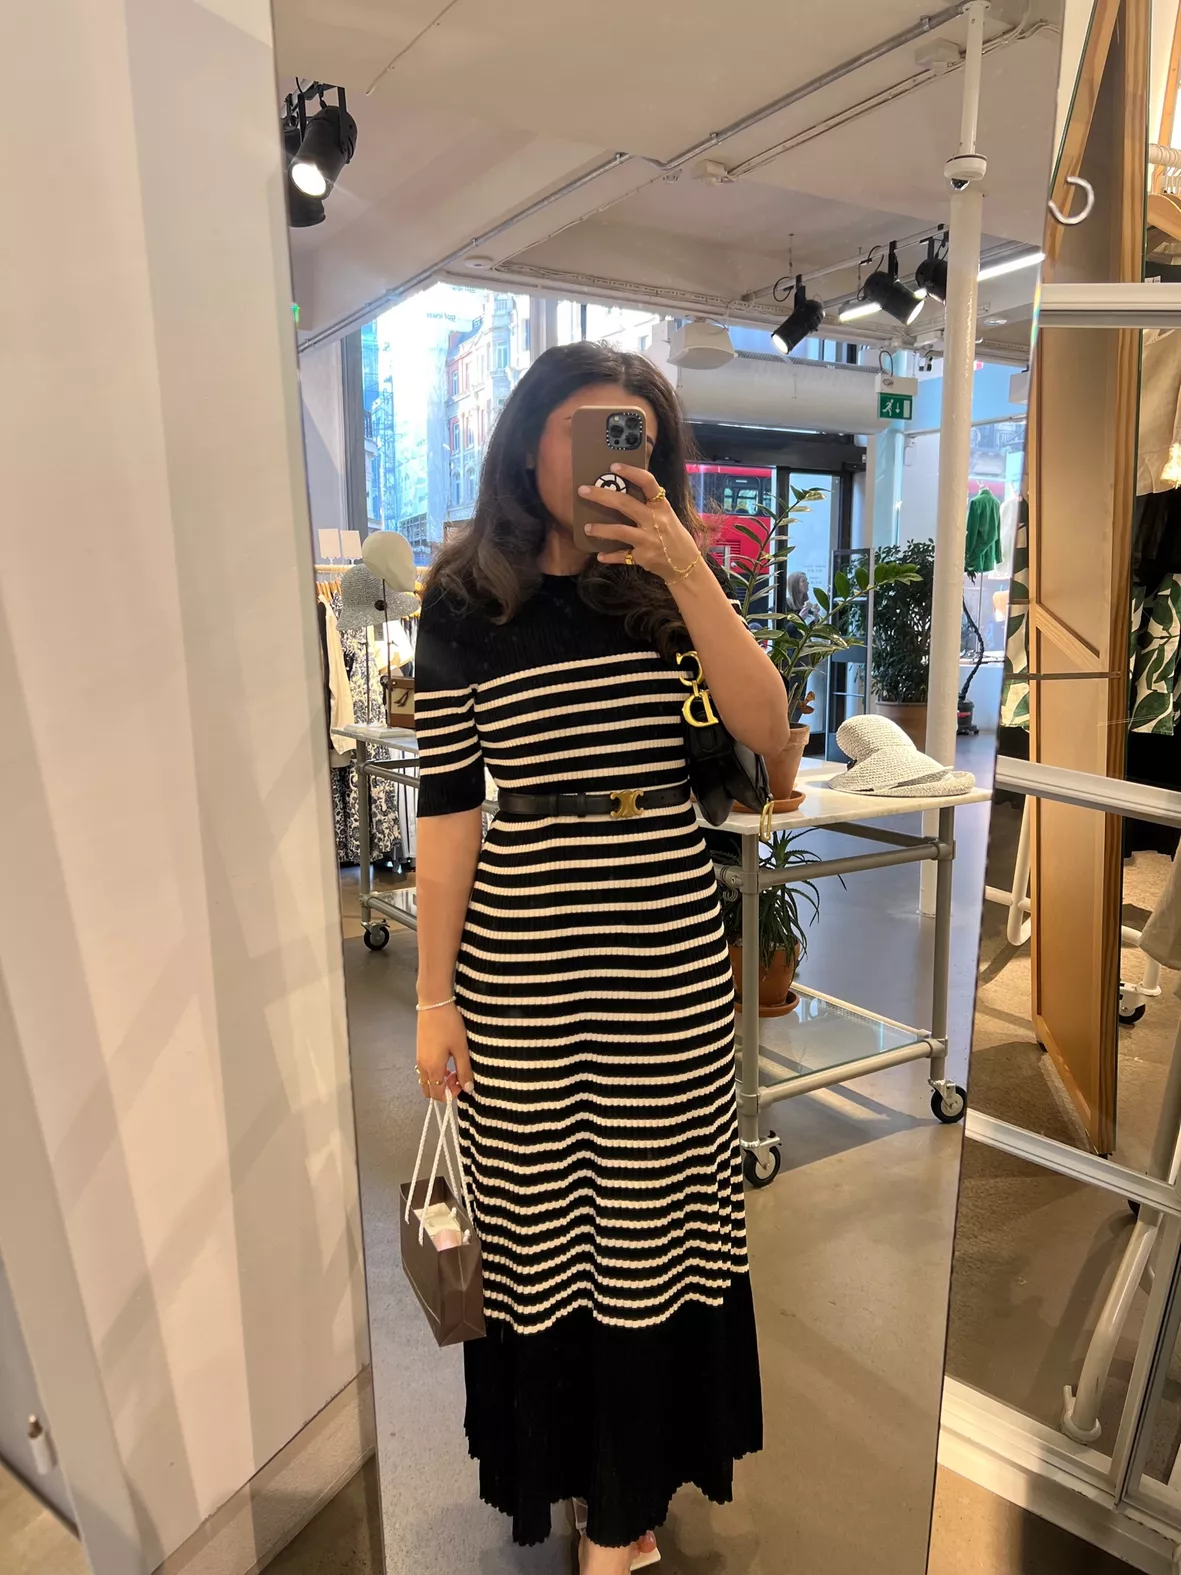 Striped Knitted Midi Dress